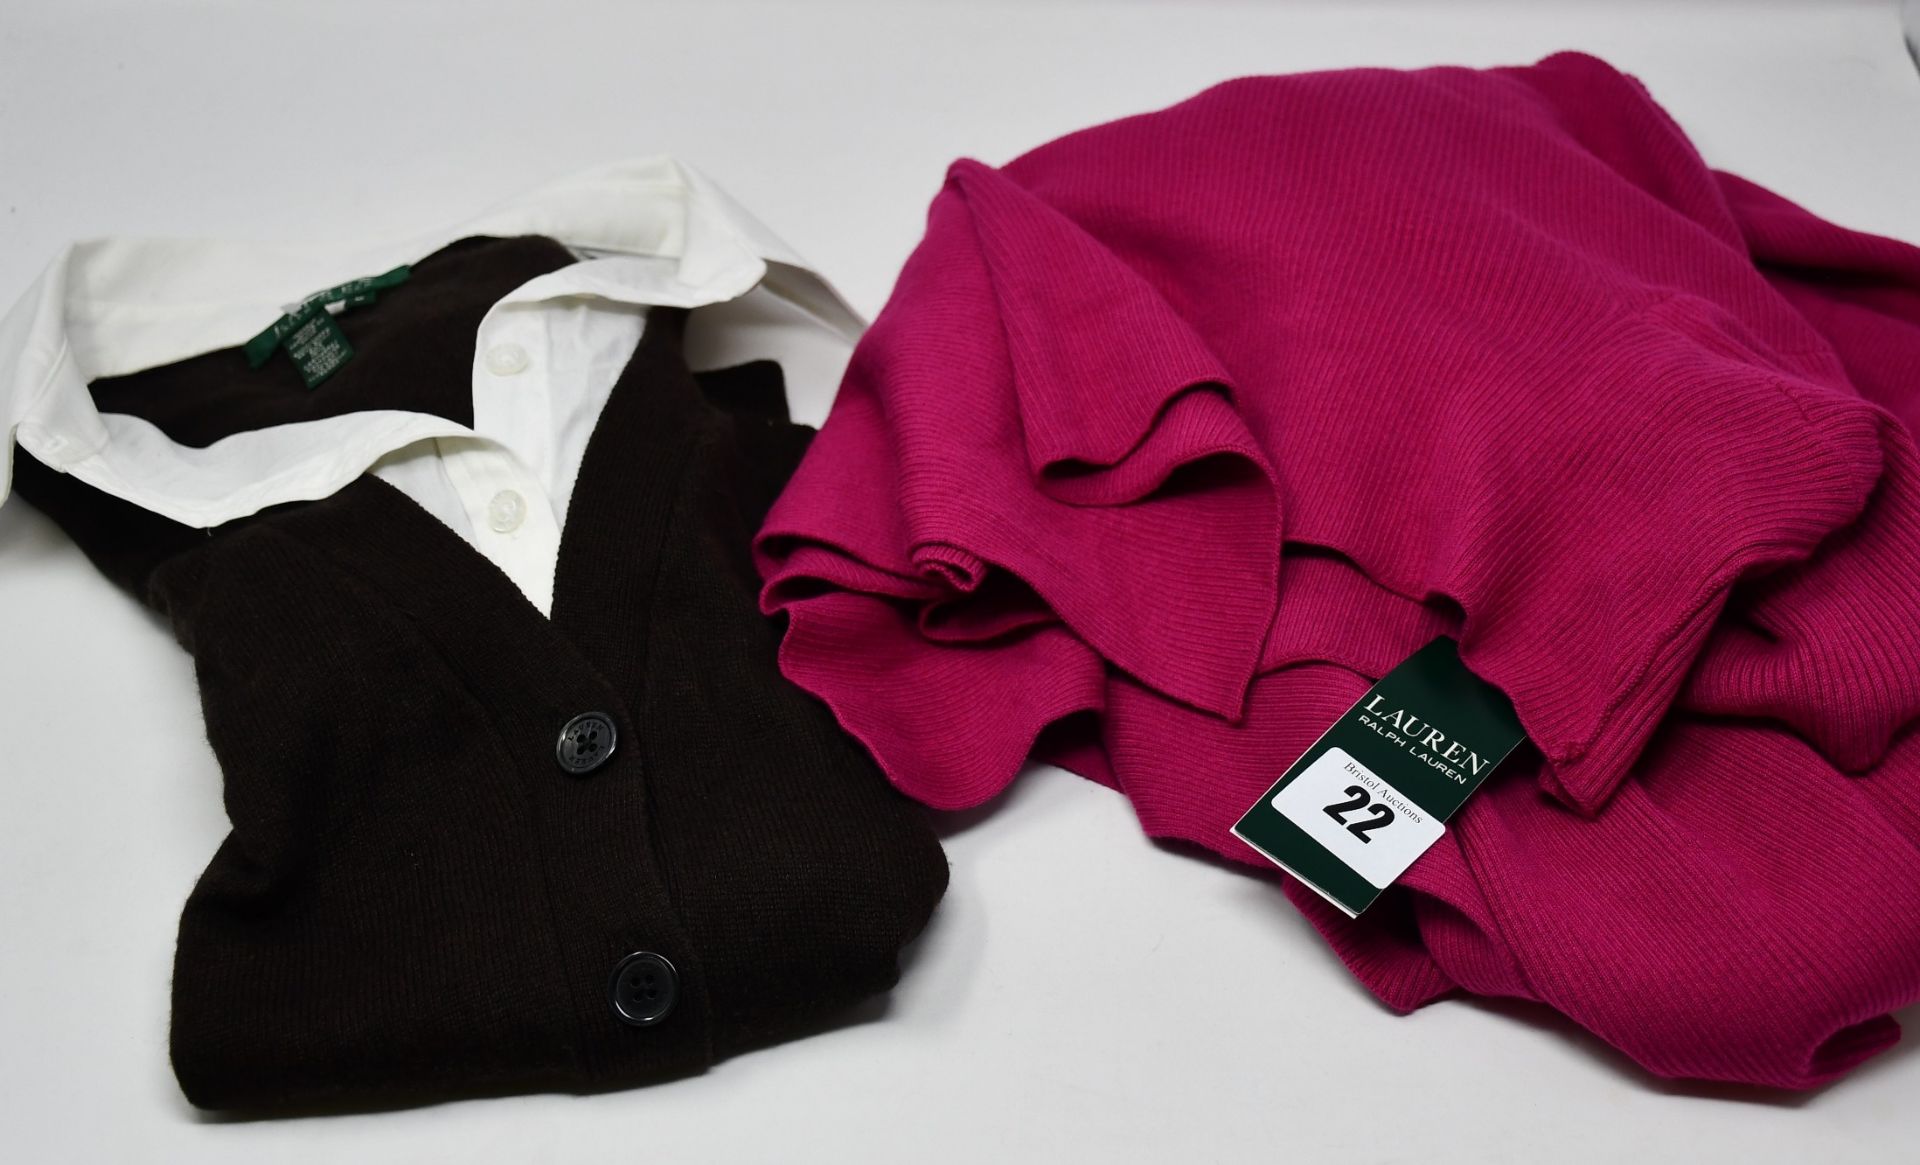 One as new Ralph Lauren fucsia open cardigan size XXL. One as new Ralph Lauren knitted brown